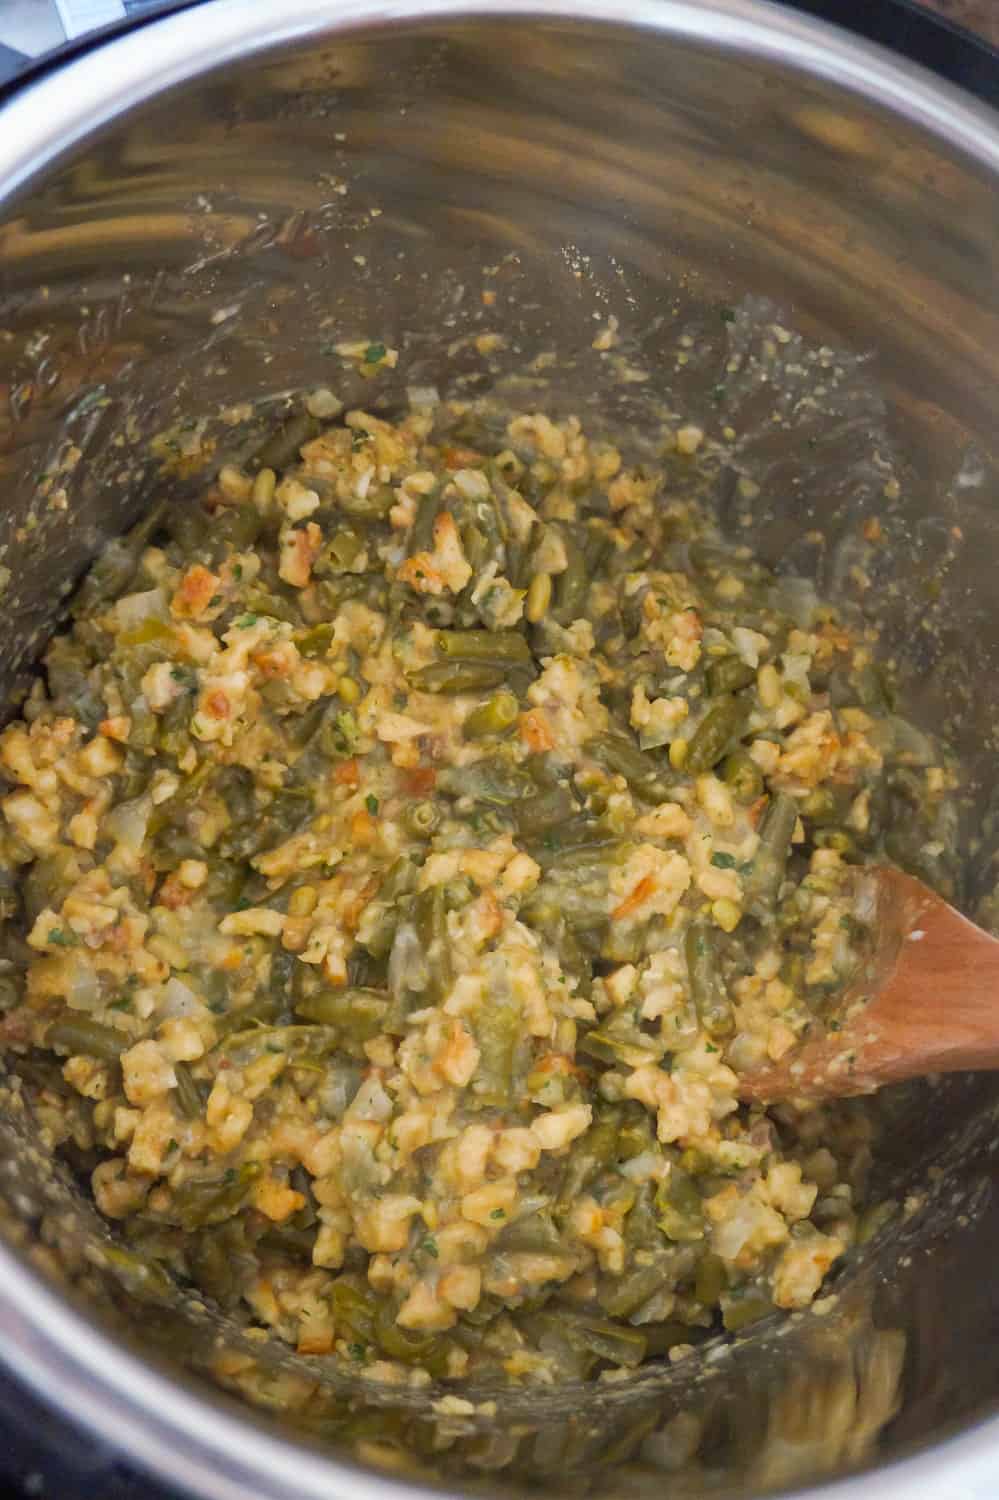 stove top stuff mix stirred into green bean casserole